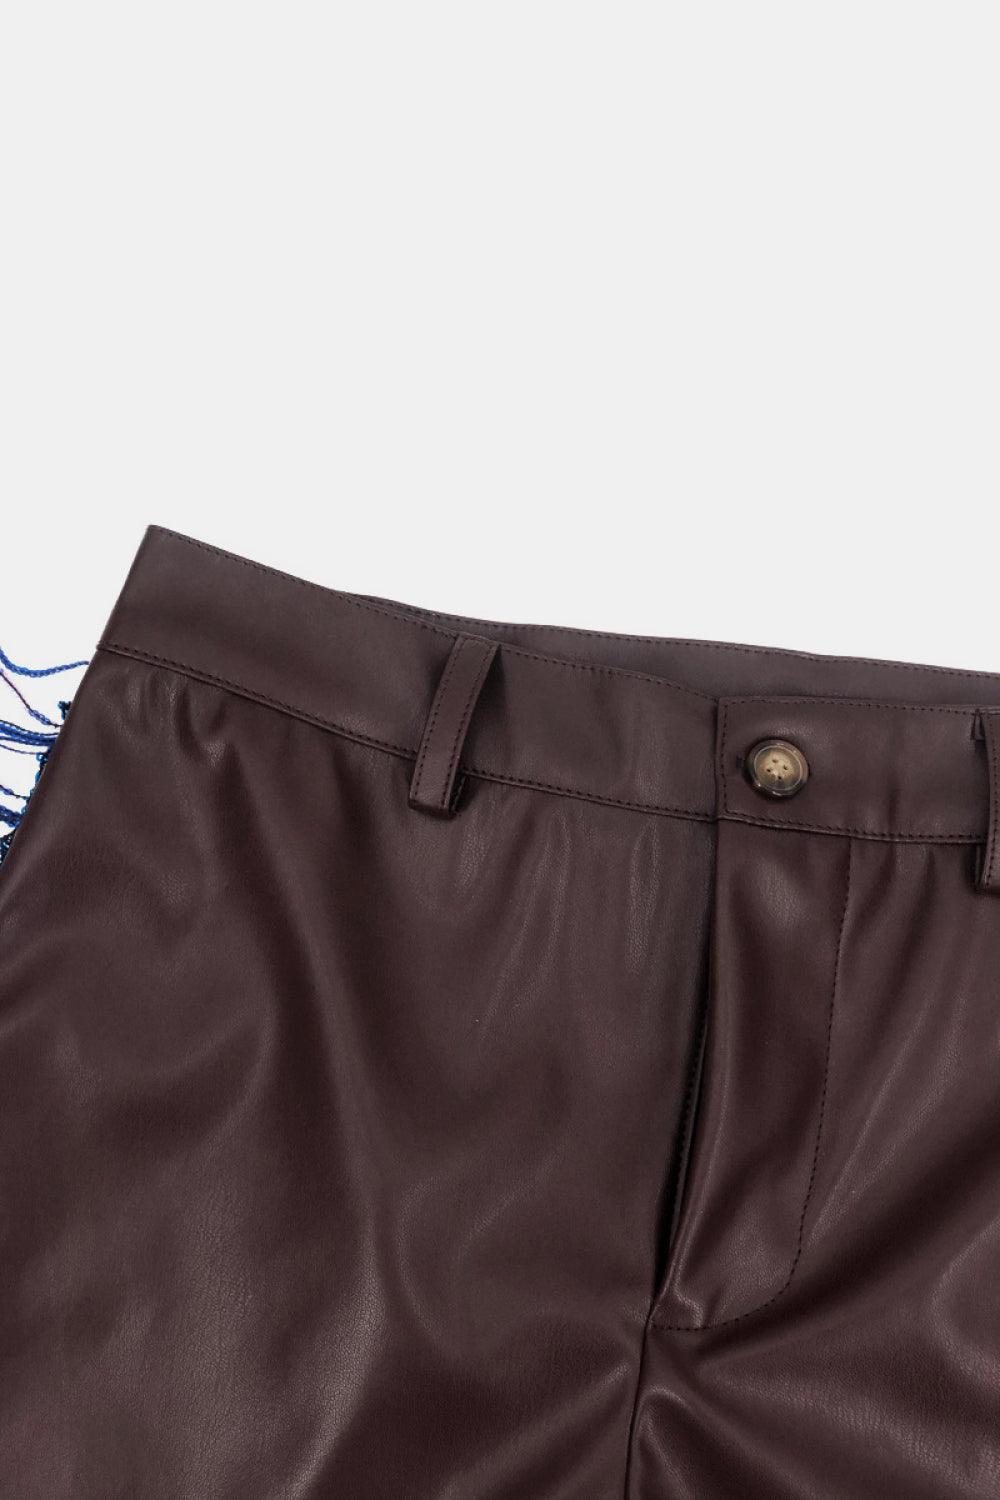 Multicolored Fringe Bralette and PU Leather Pants Set